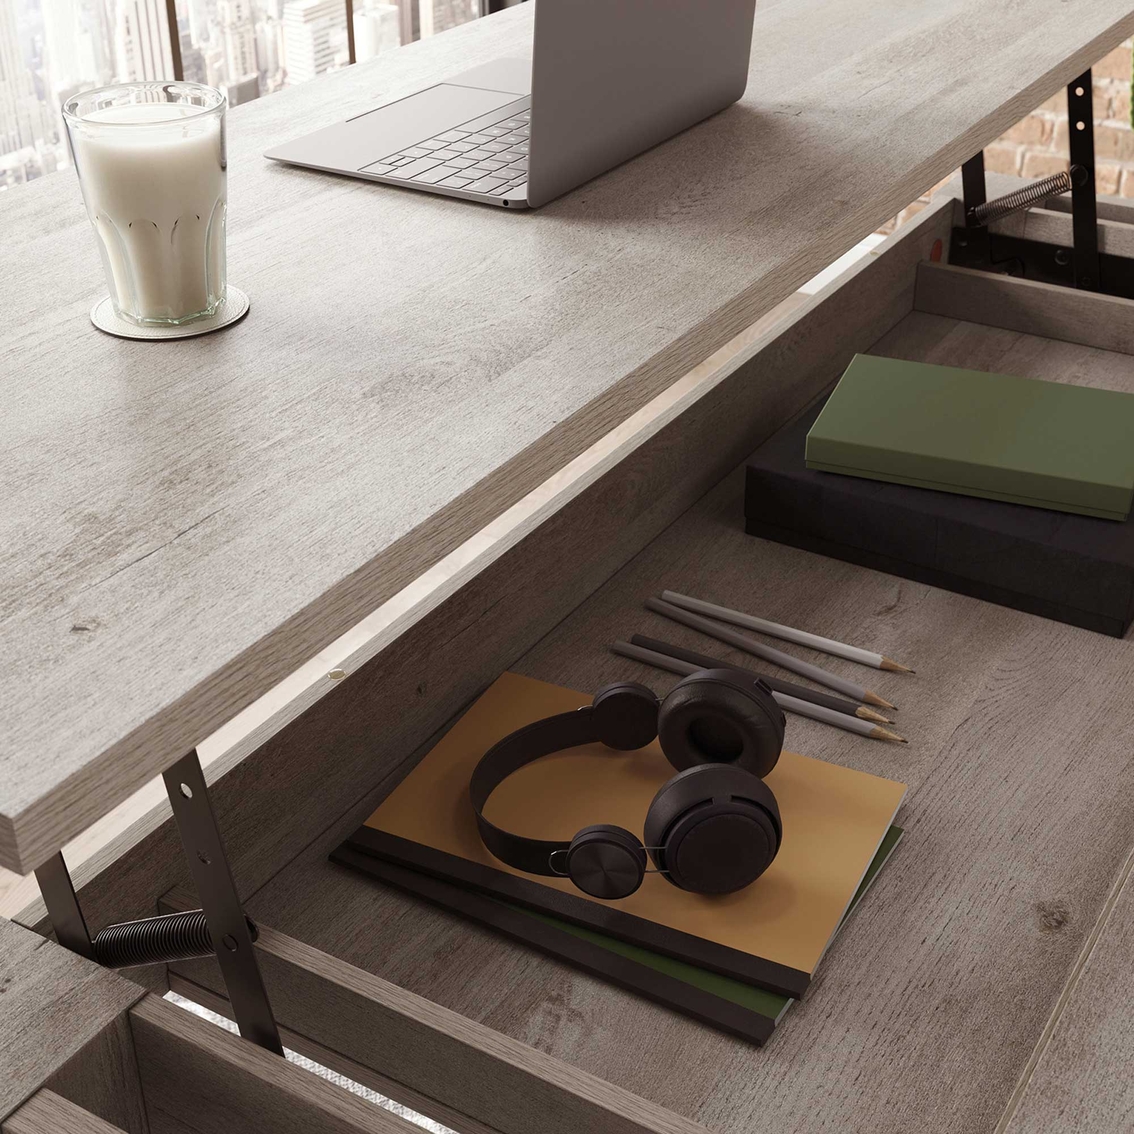 Sauder Northcott Lift Top Dining Table Desk - Image 7 of 10